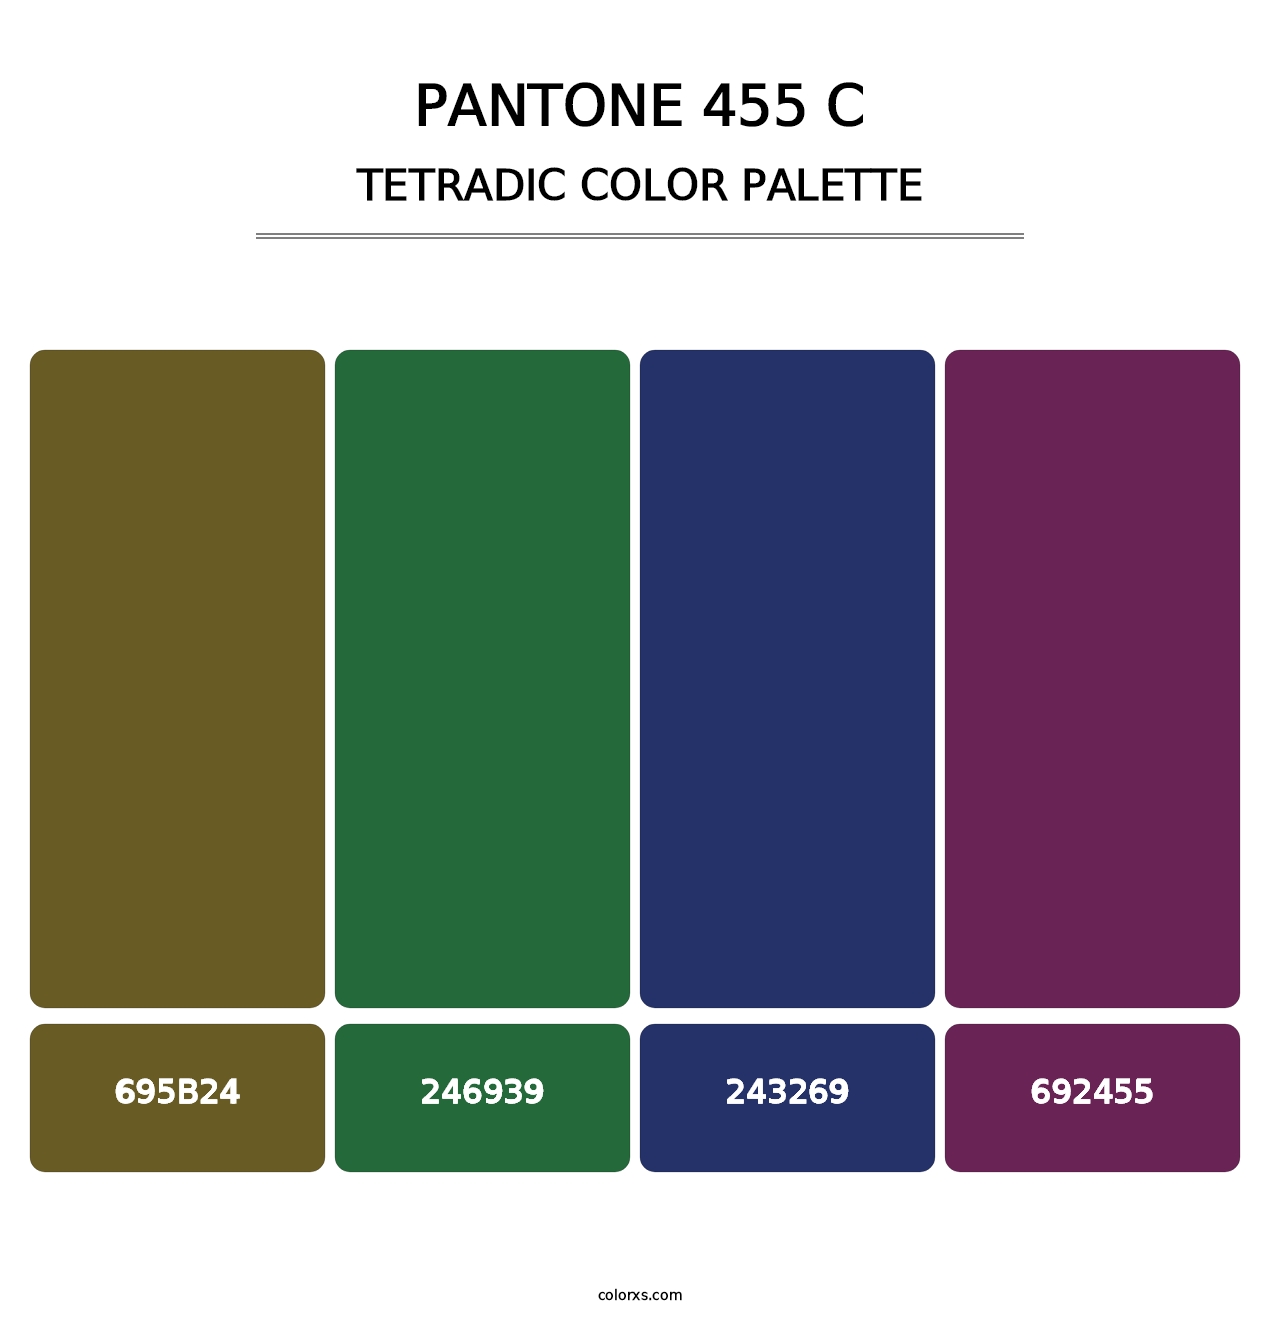 PANTONE 455 C - Tetradic Color Palette